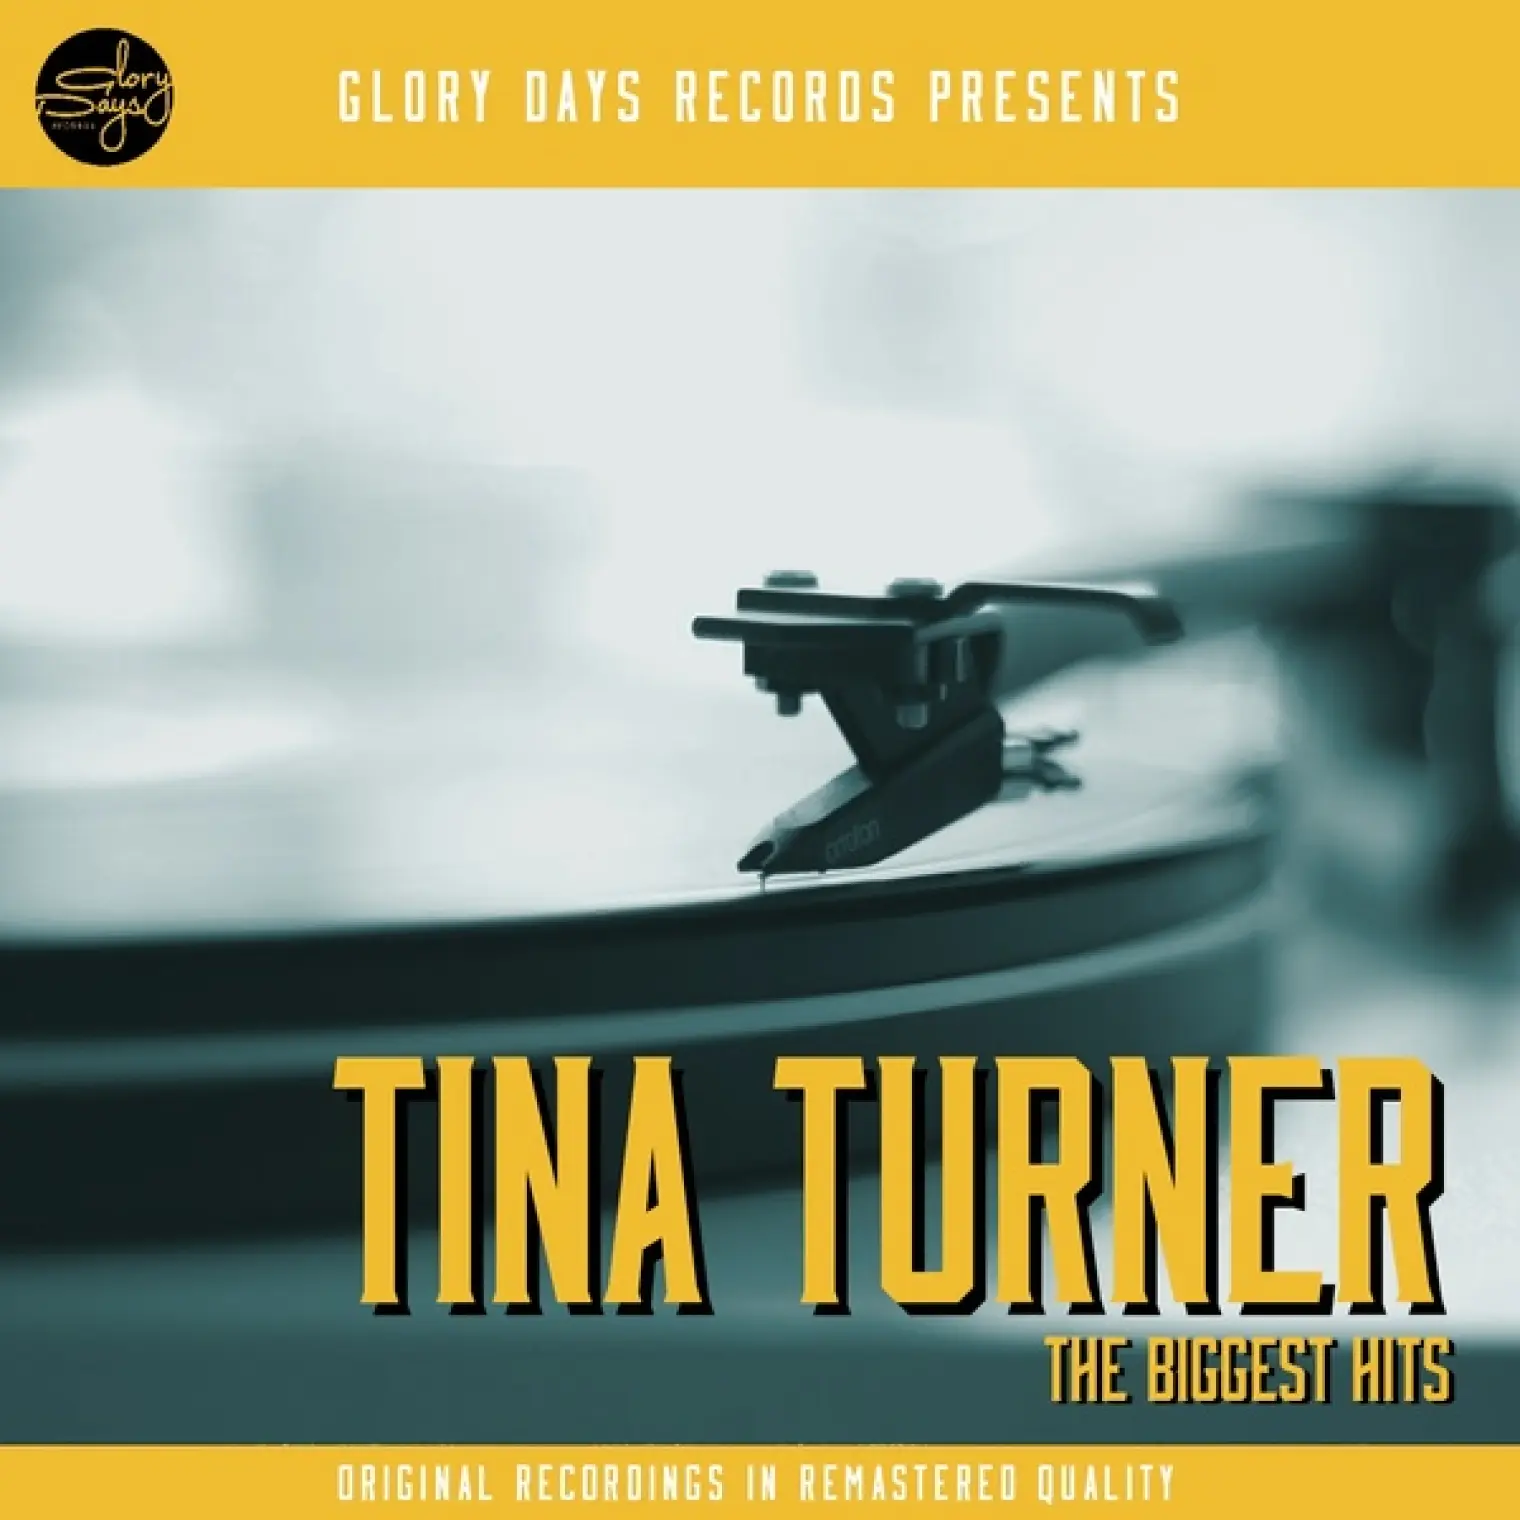 The Biggest Hits -  Tina Turner 